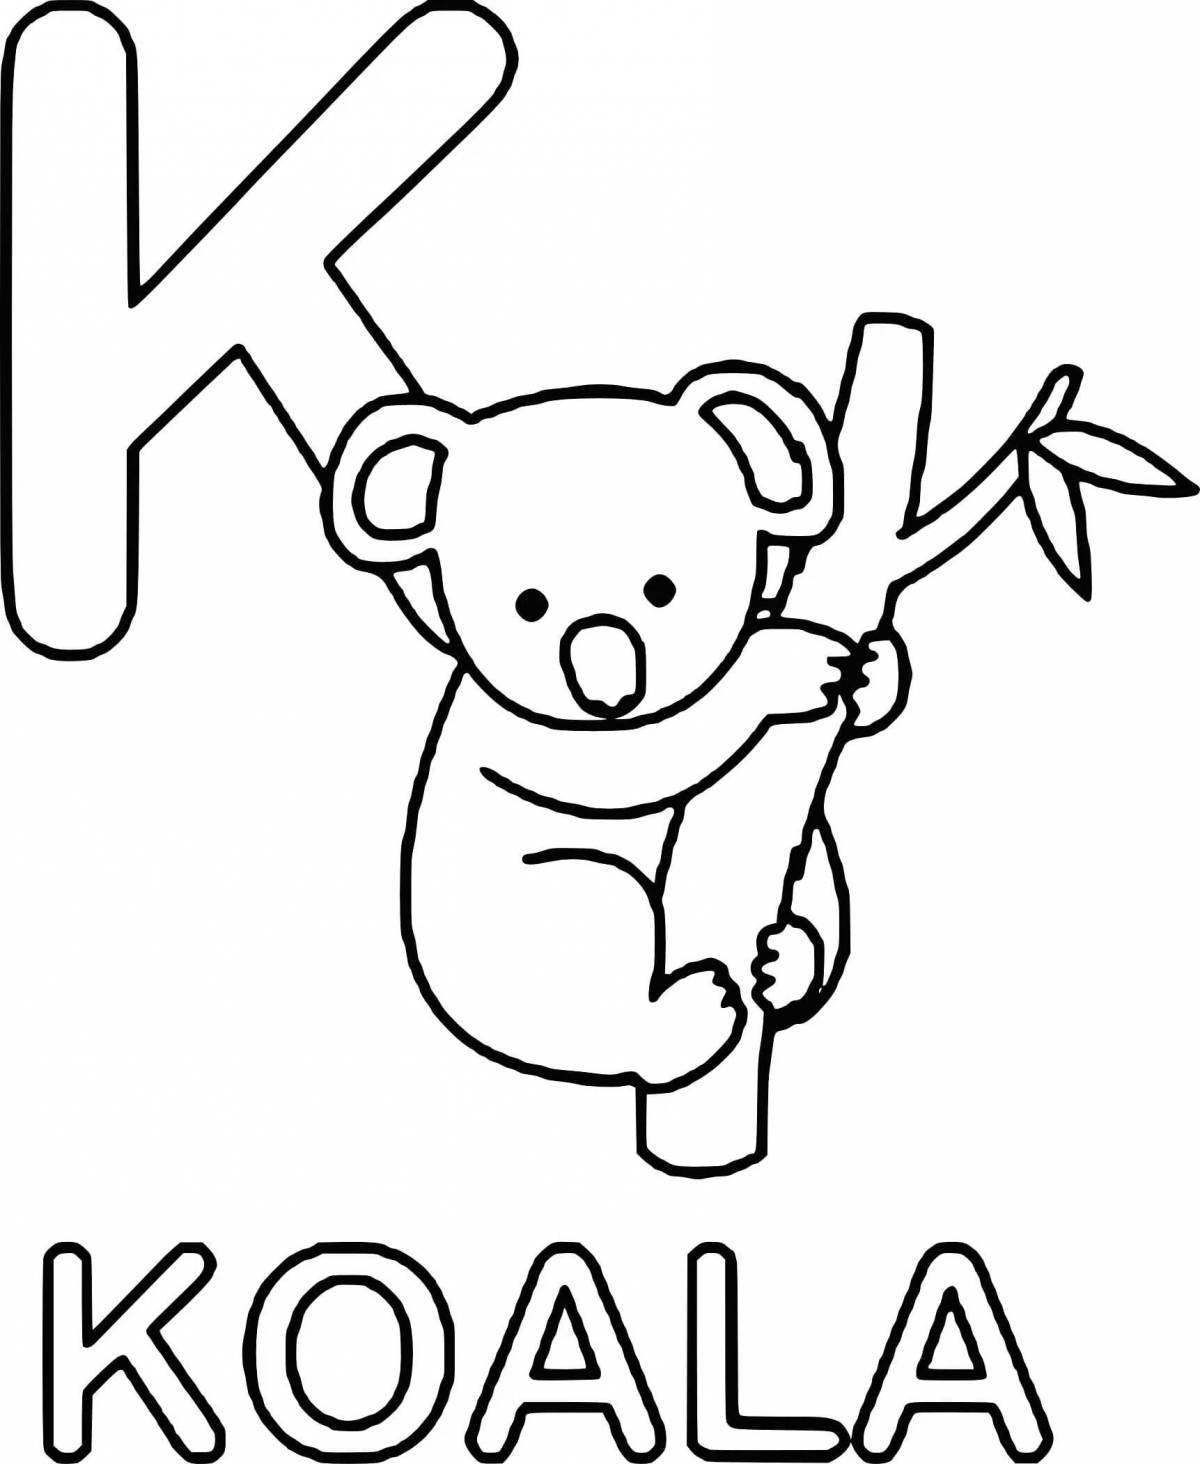 Irresistible koala coloring book for kids